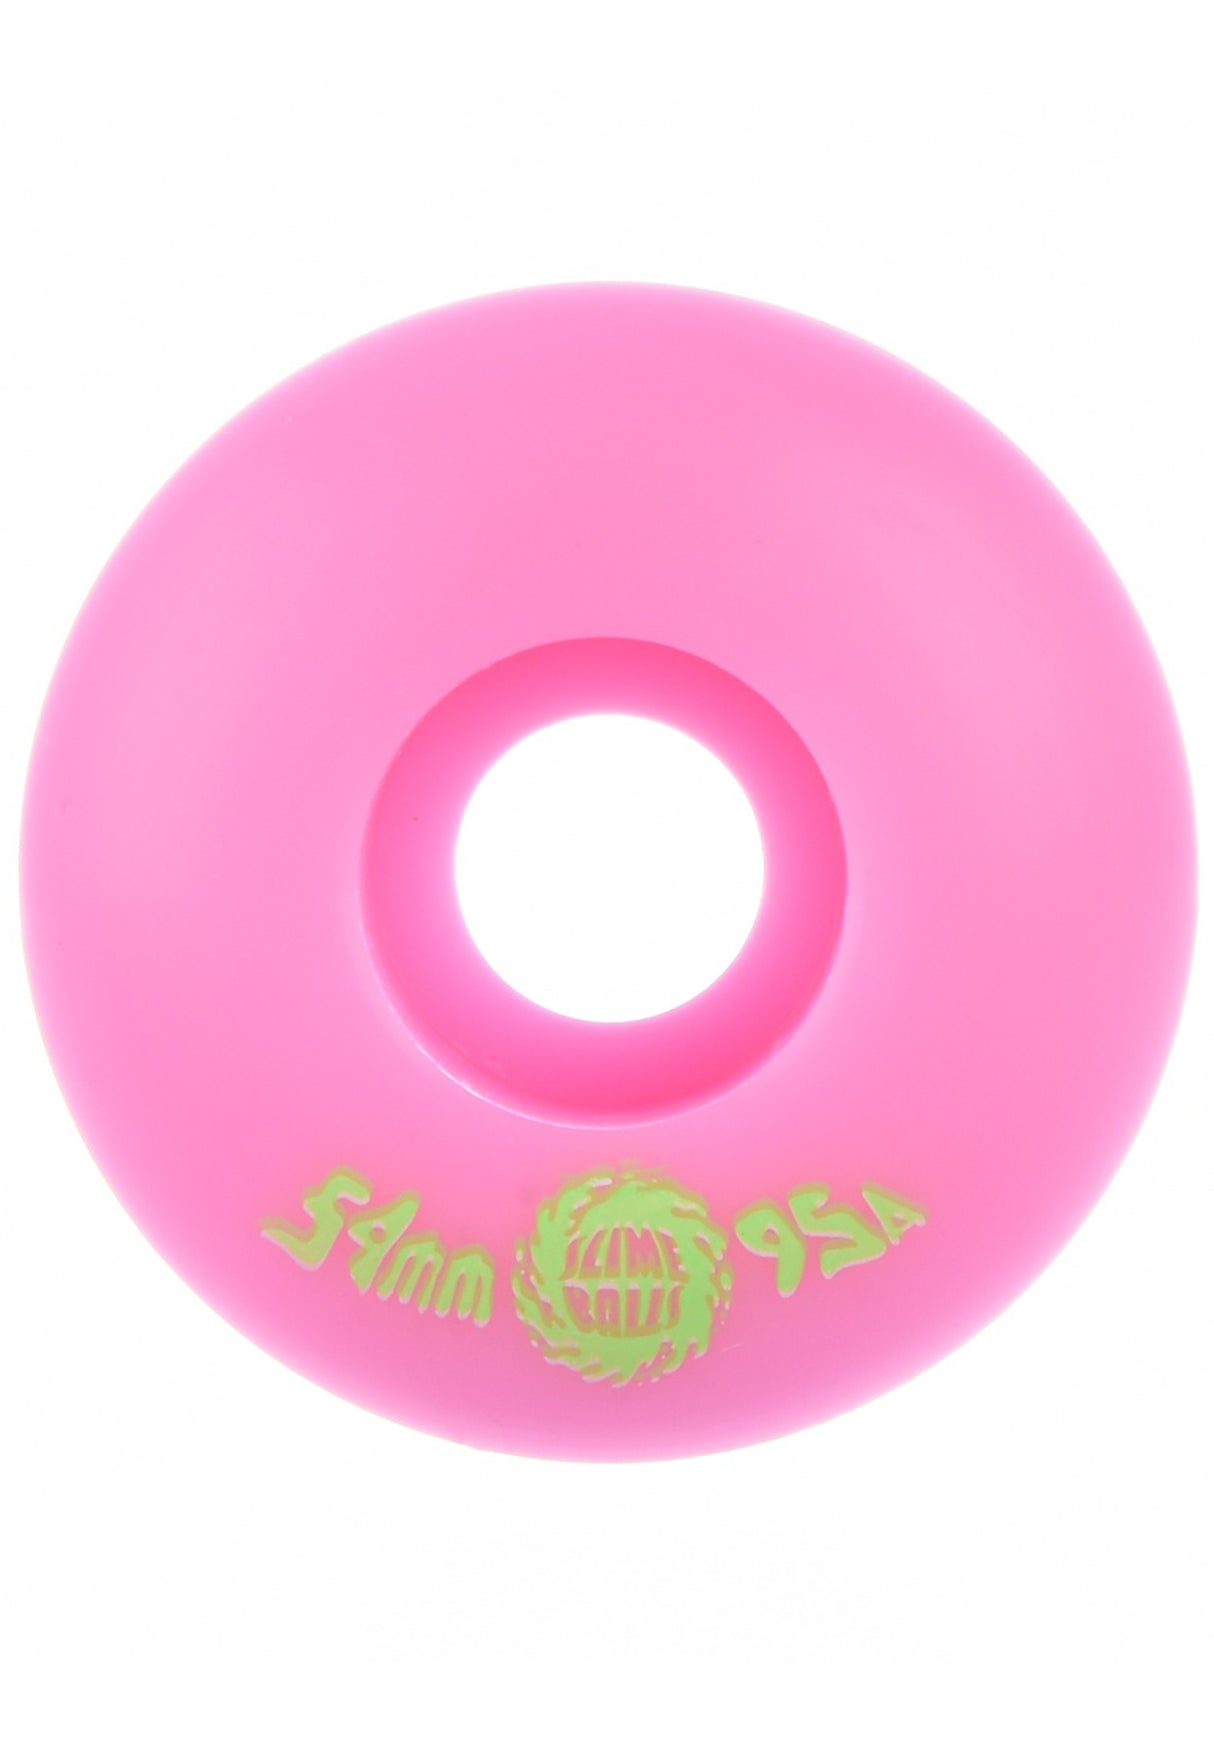 Snot Rockets Pastel Pink 95a Slime Balls pastel-pink Close-Up2